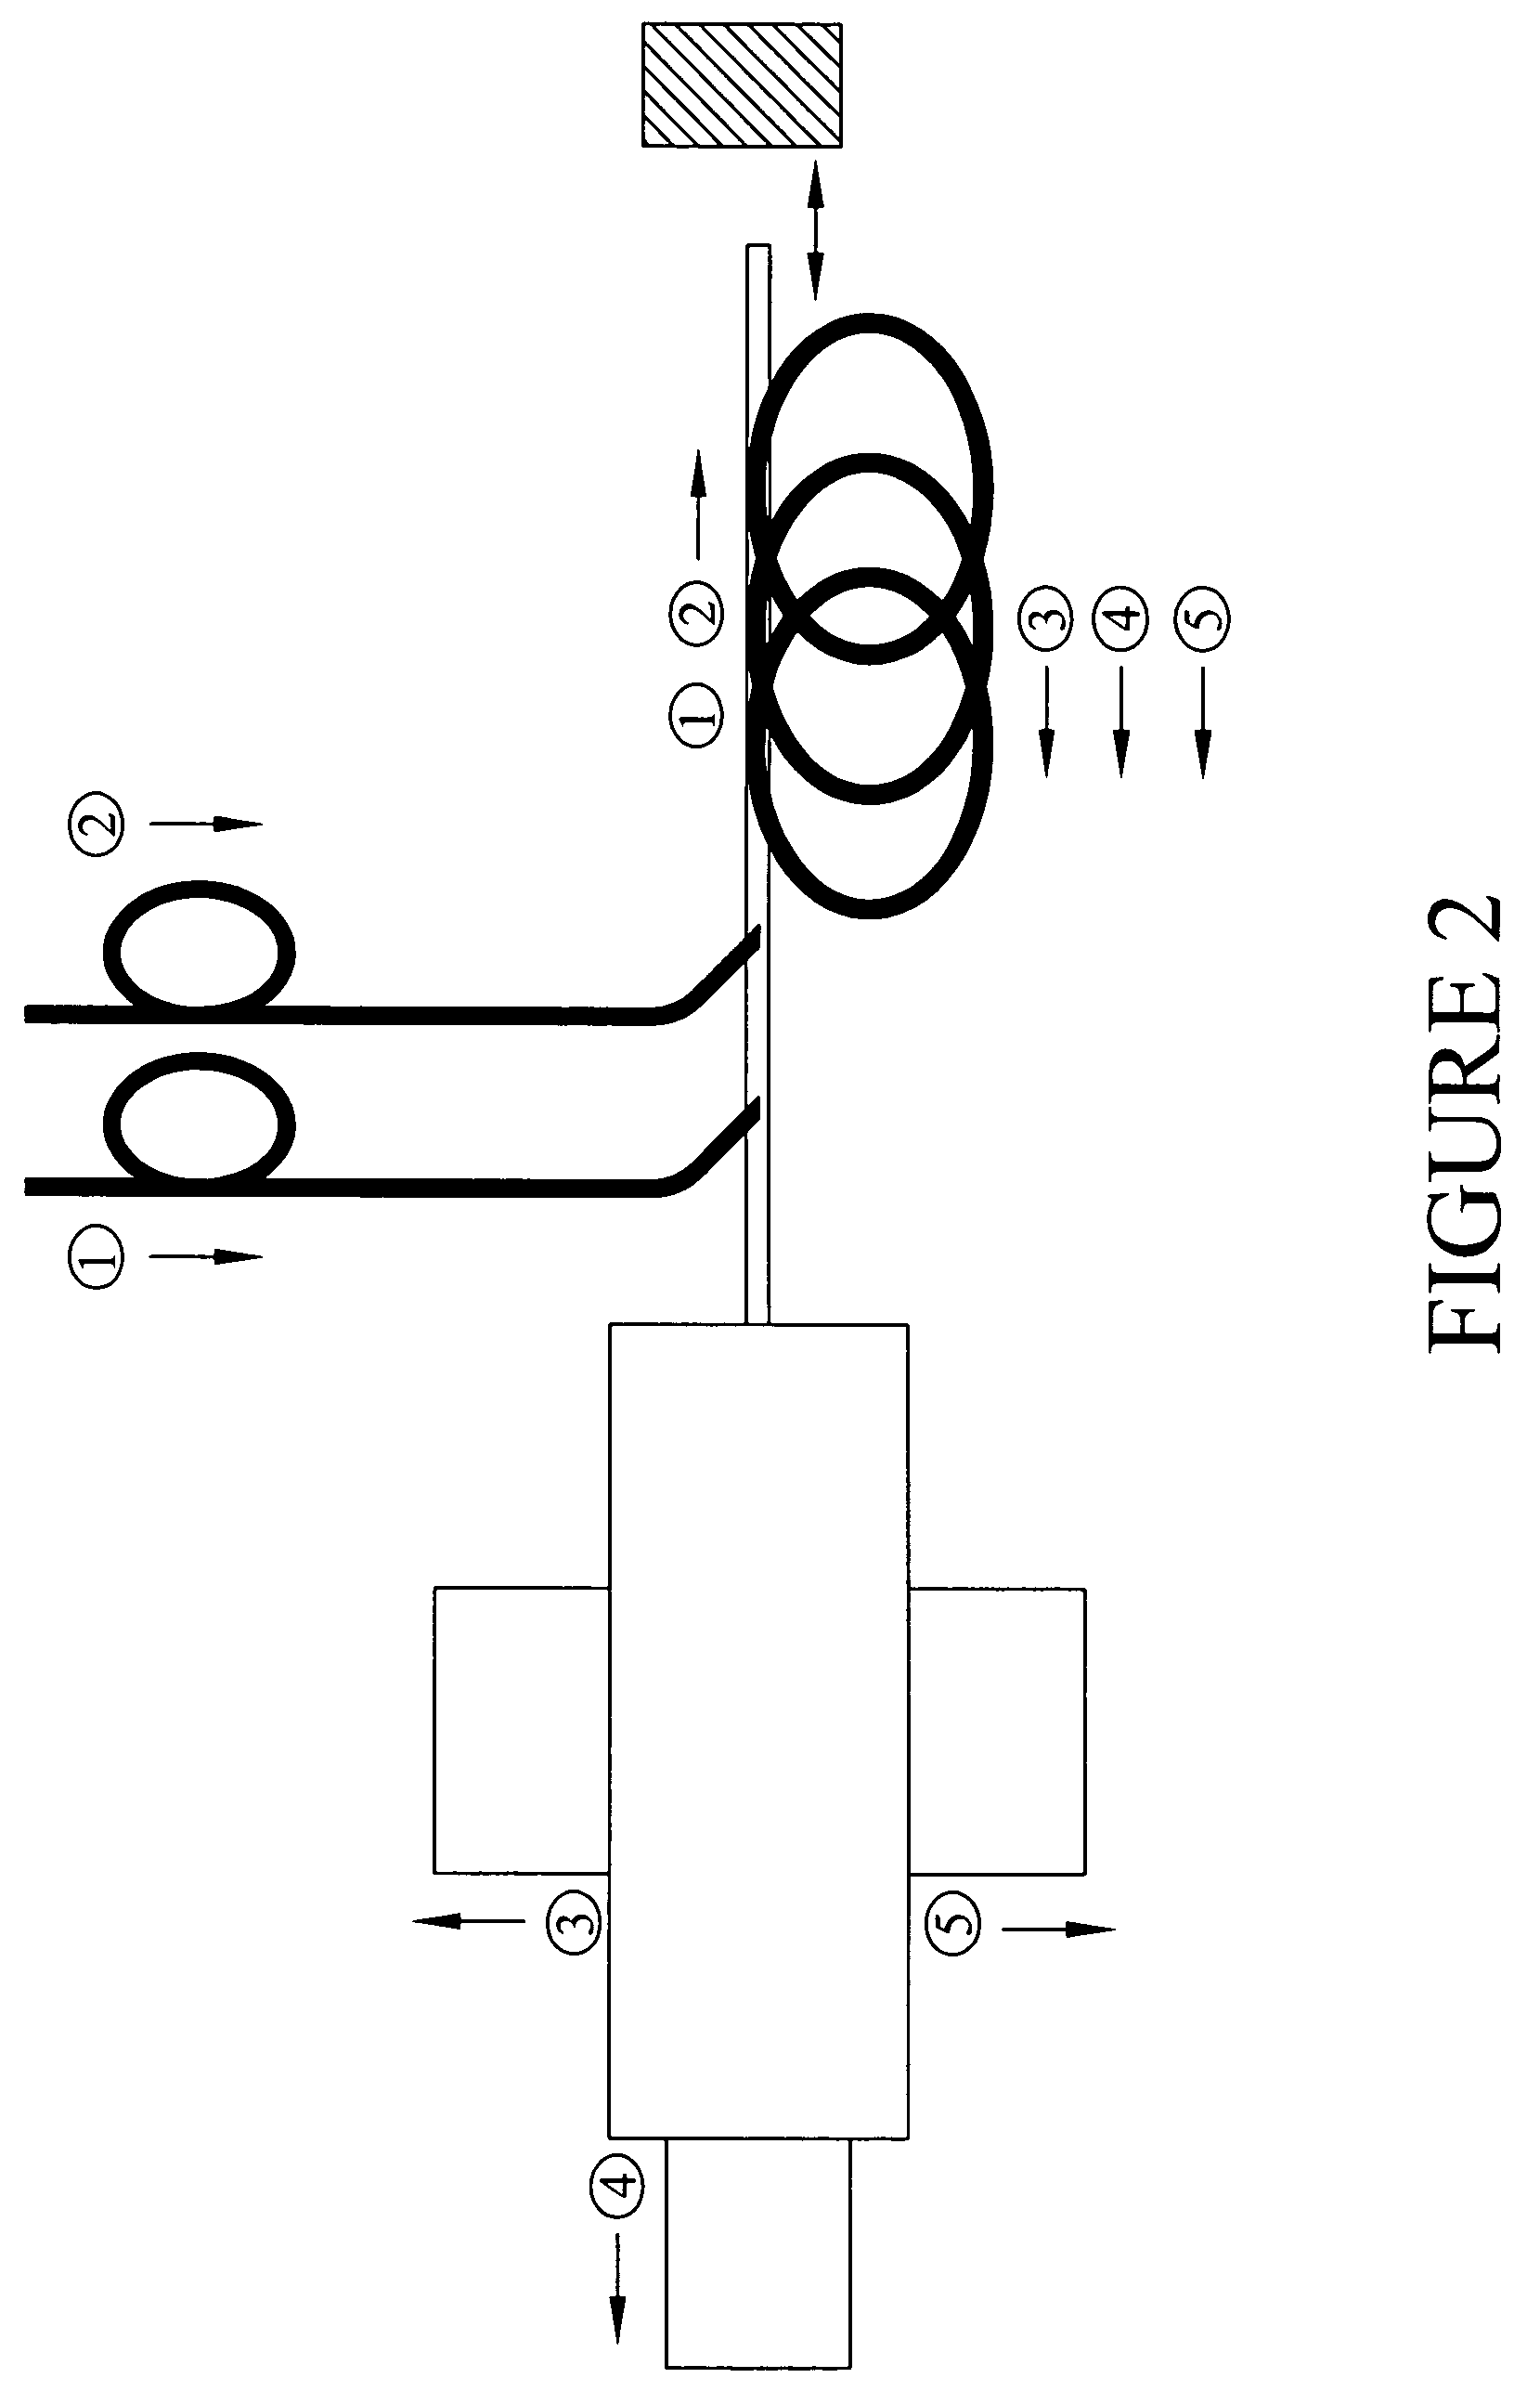 Method and apparatus for fiberscope